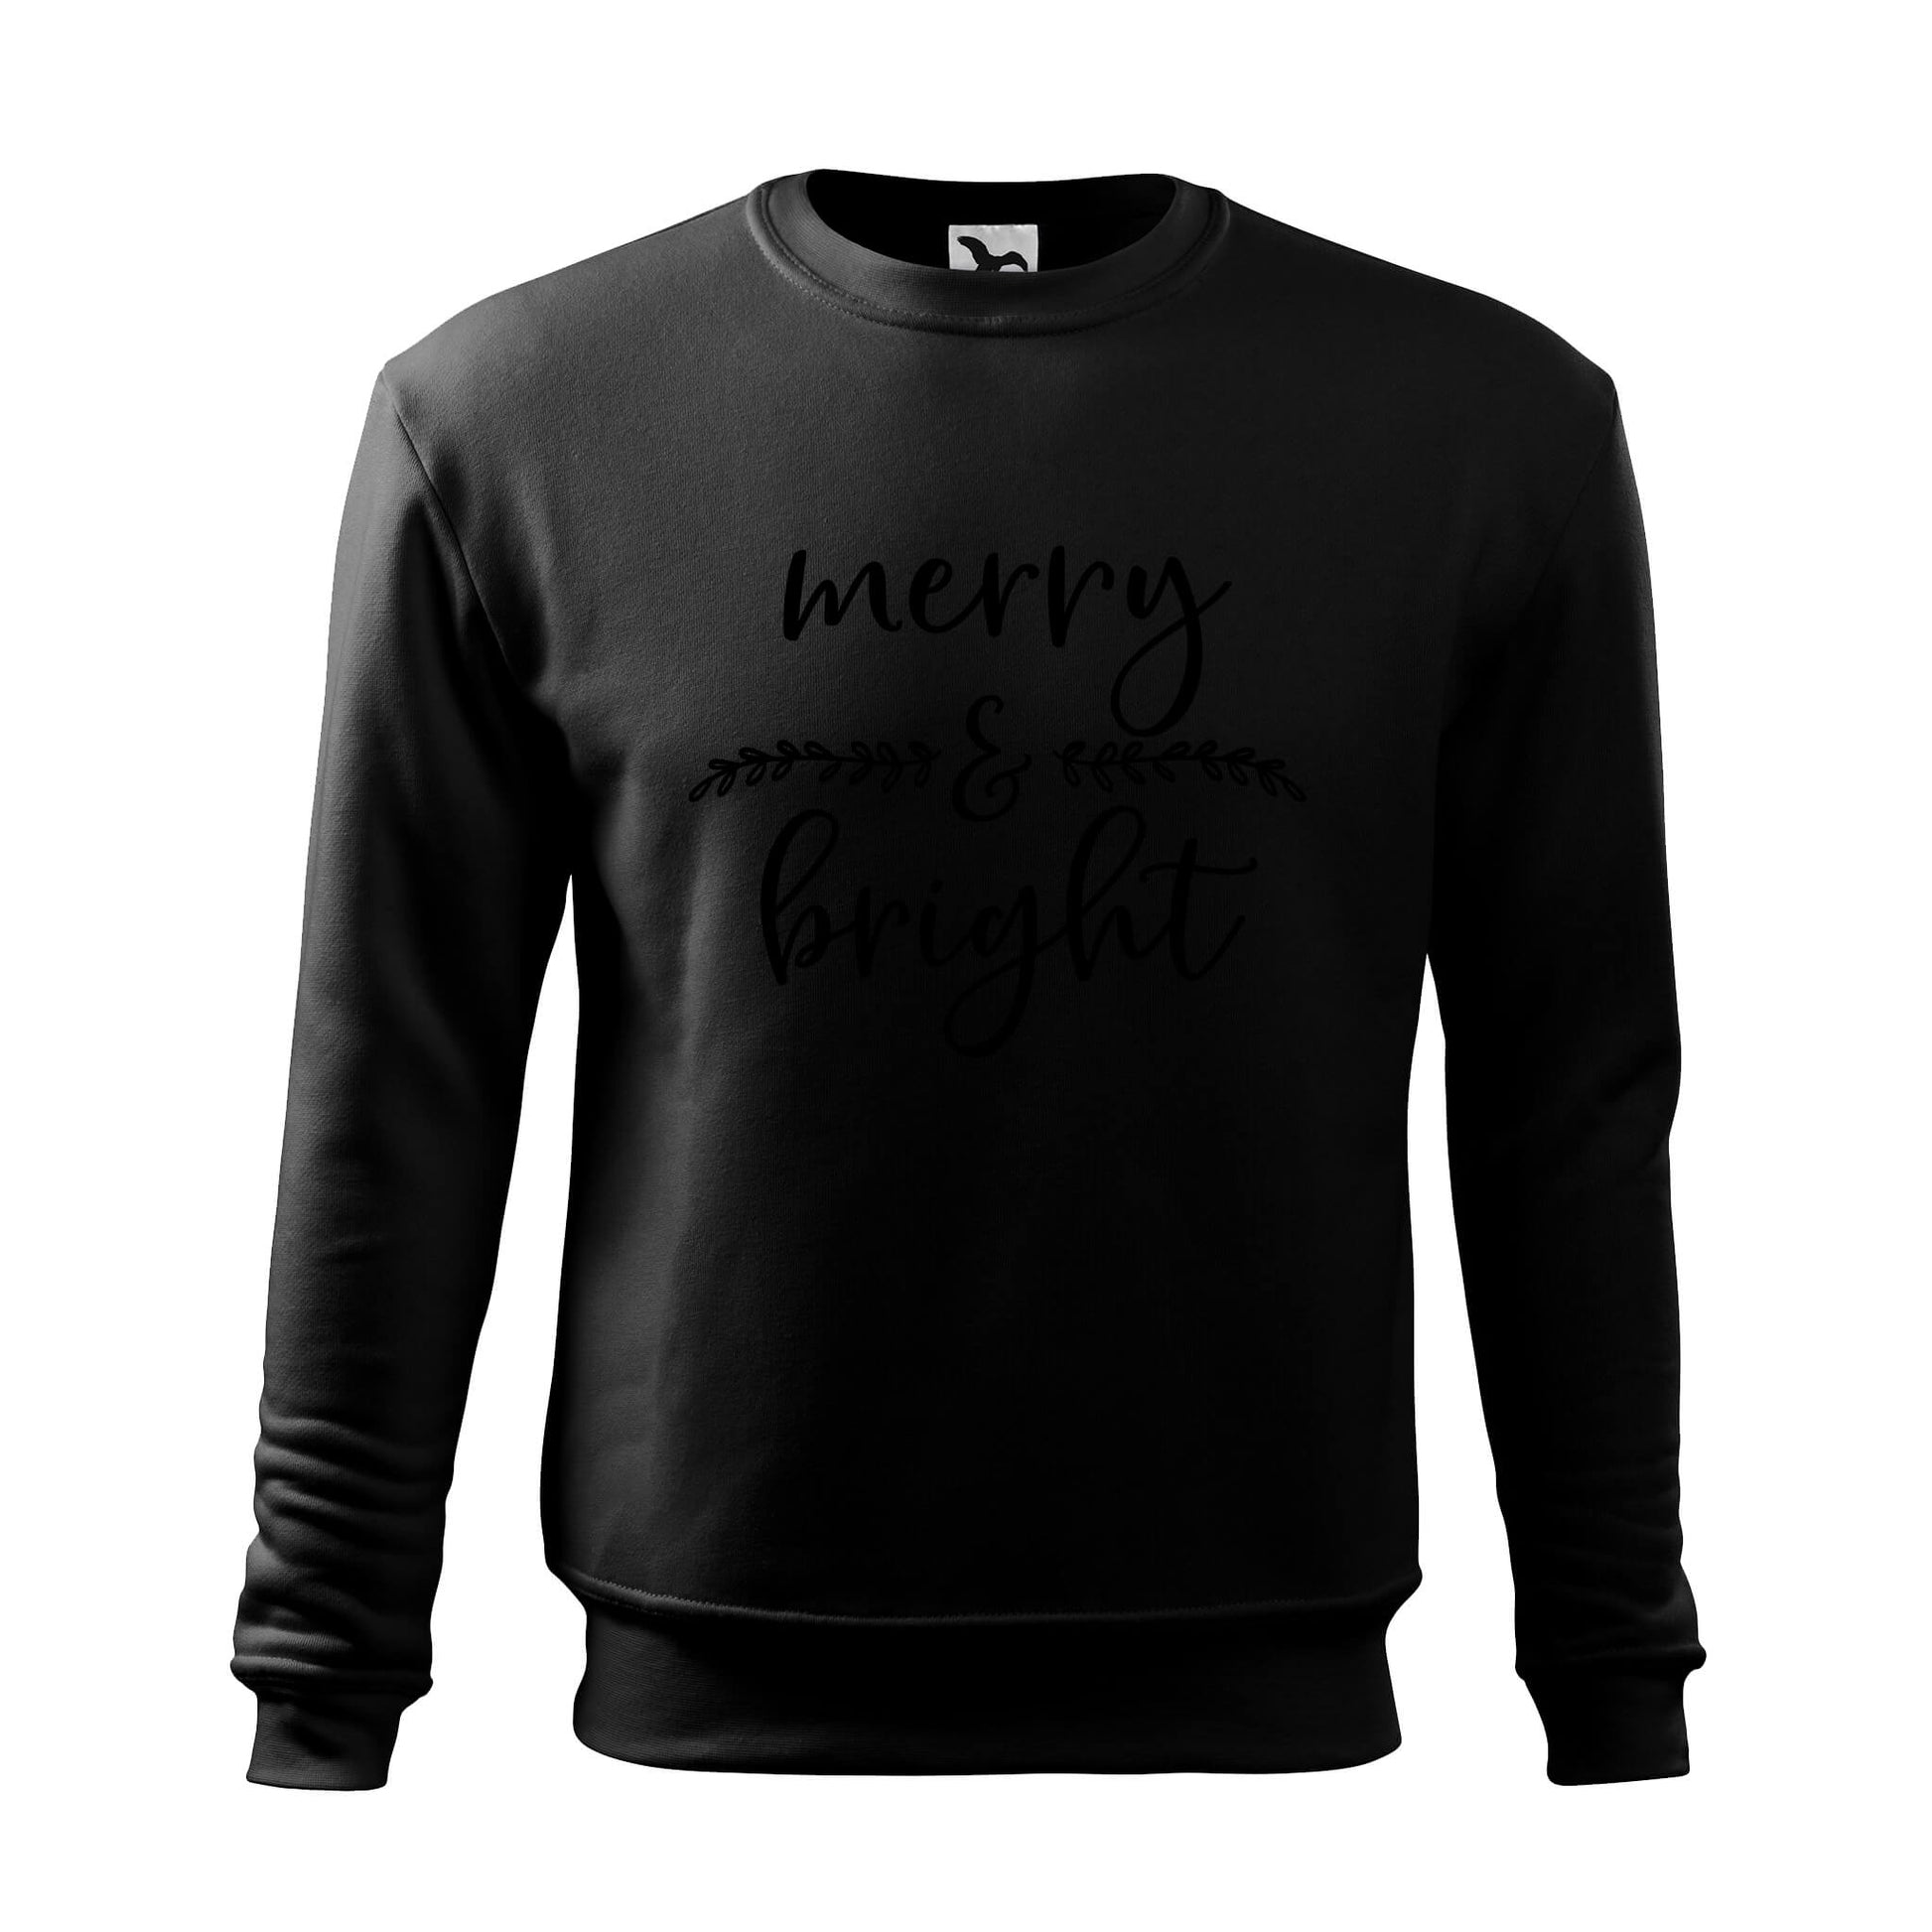 Merry and bright 2 sweatshirt - rvdesignprint